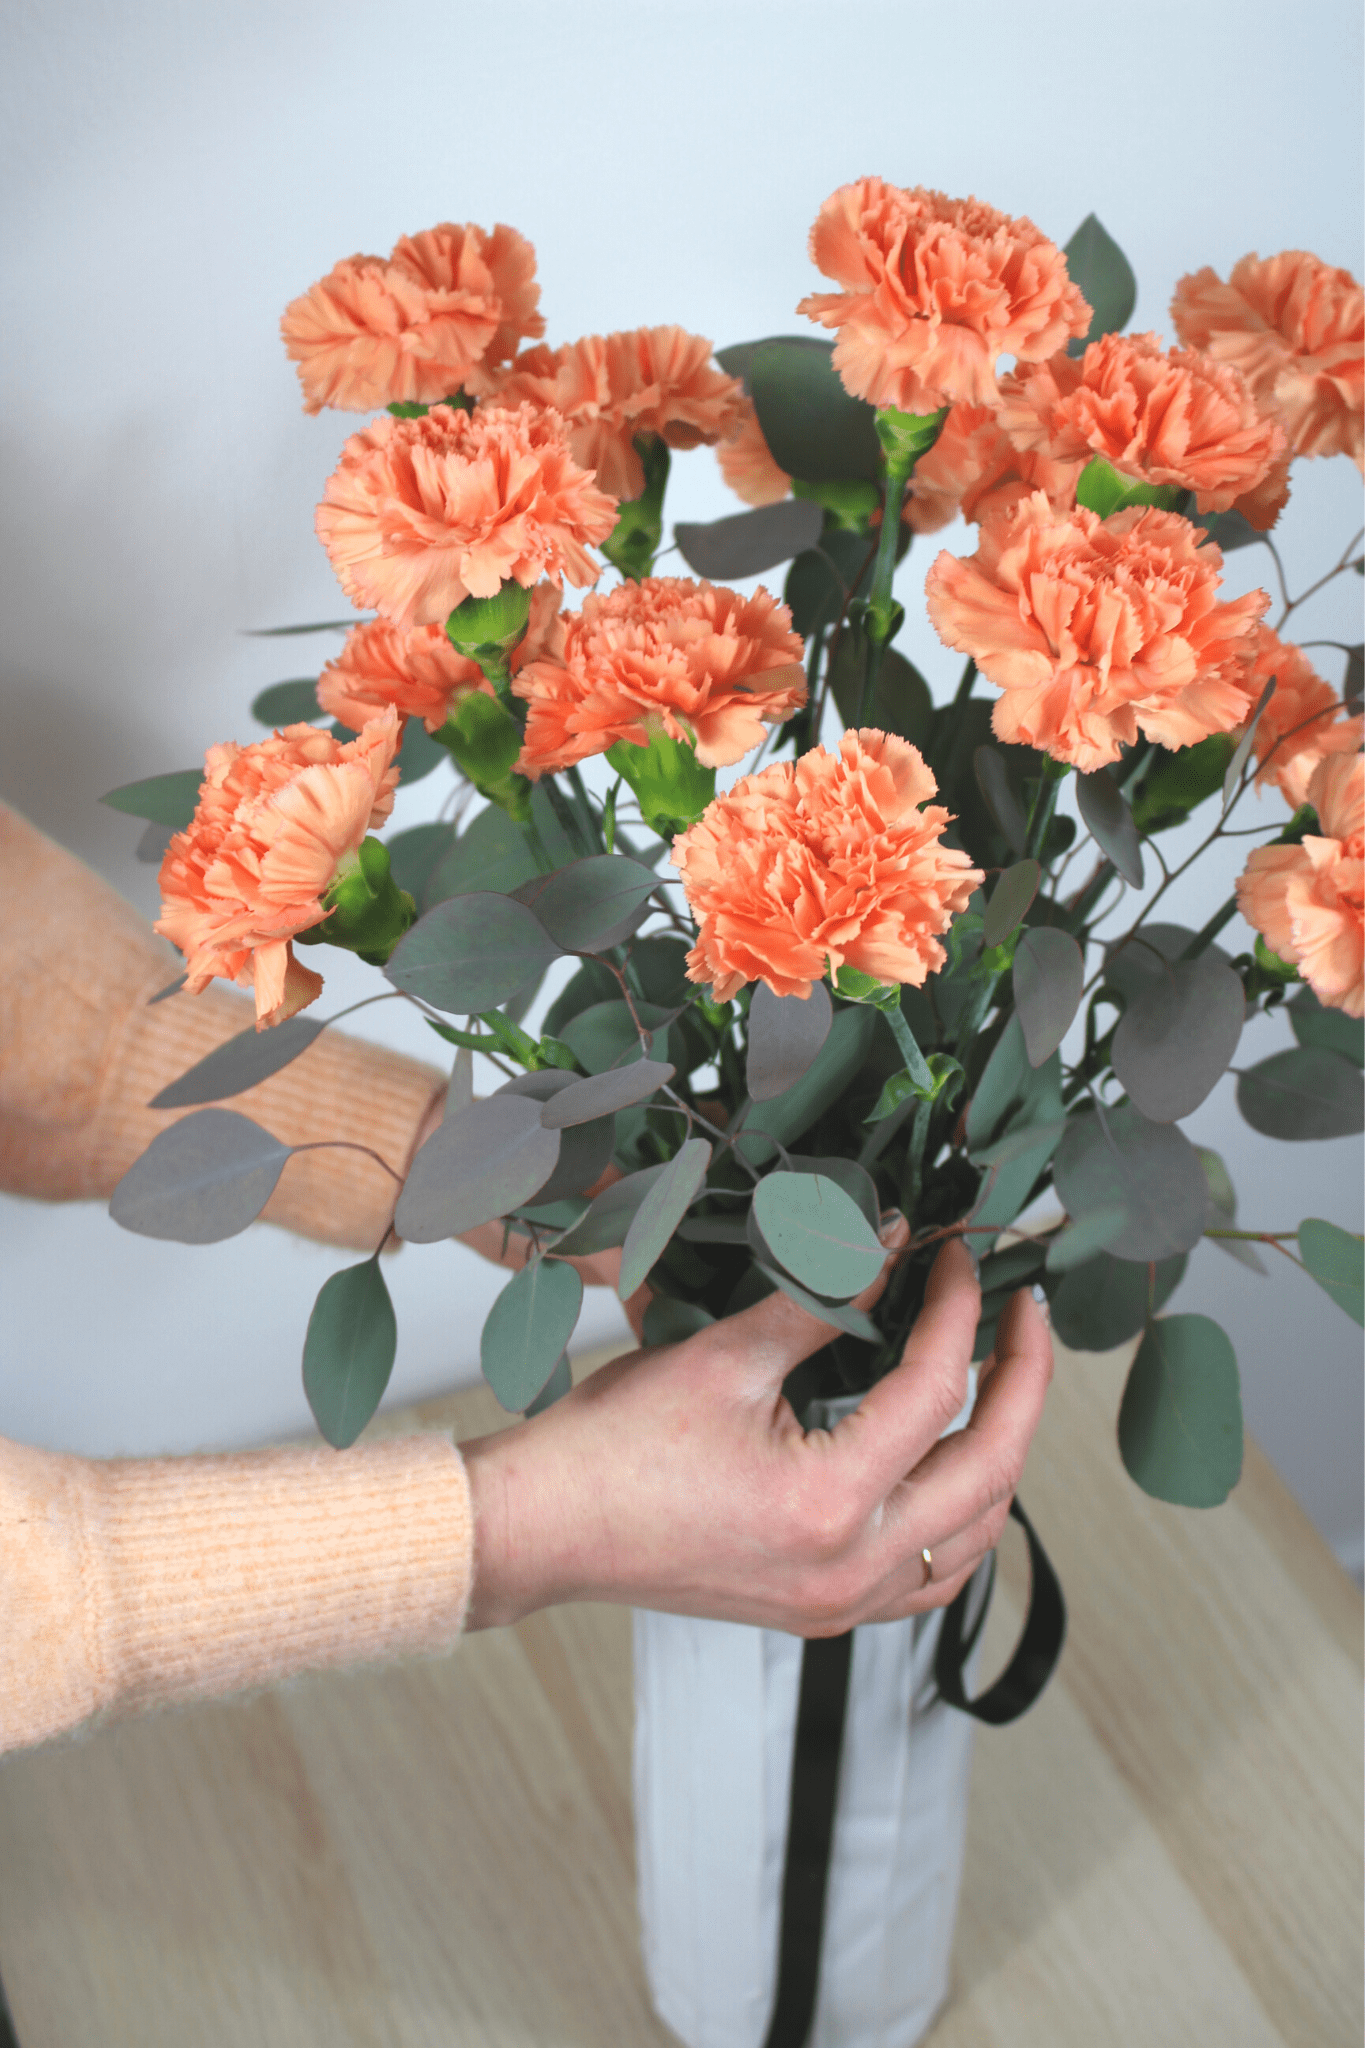 Annual Bouquet - Orange Carnations